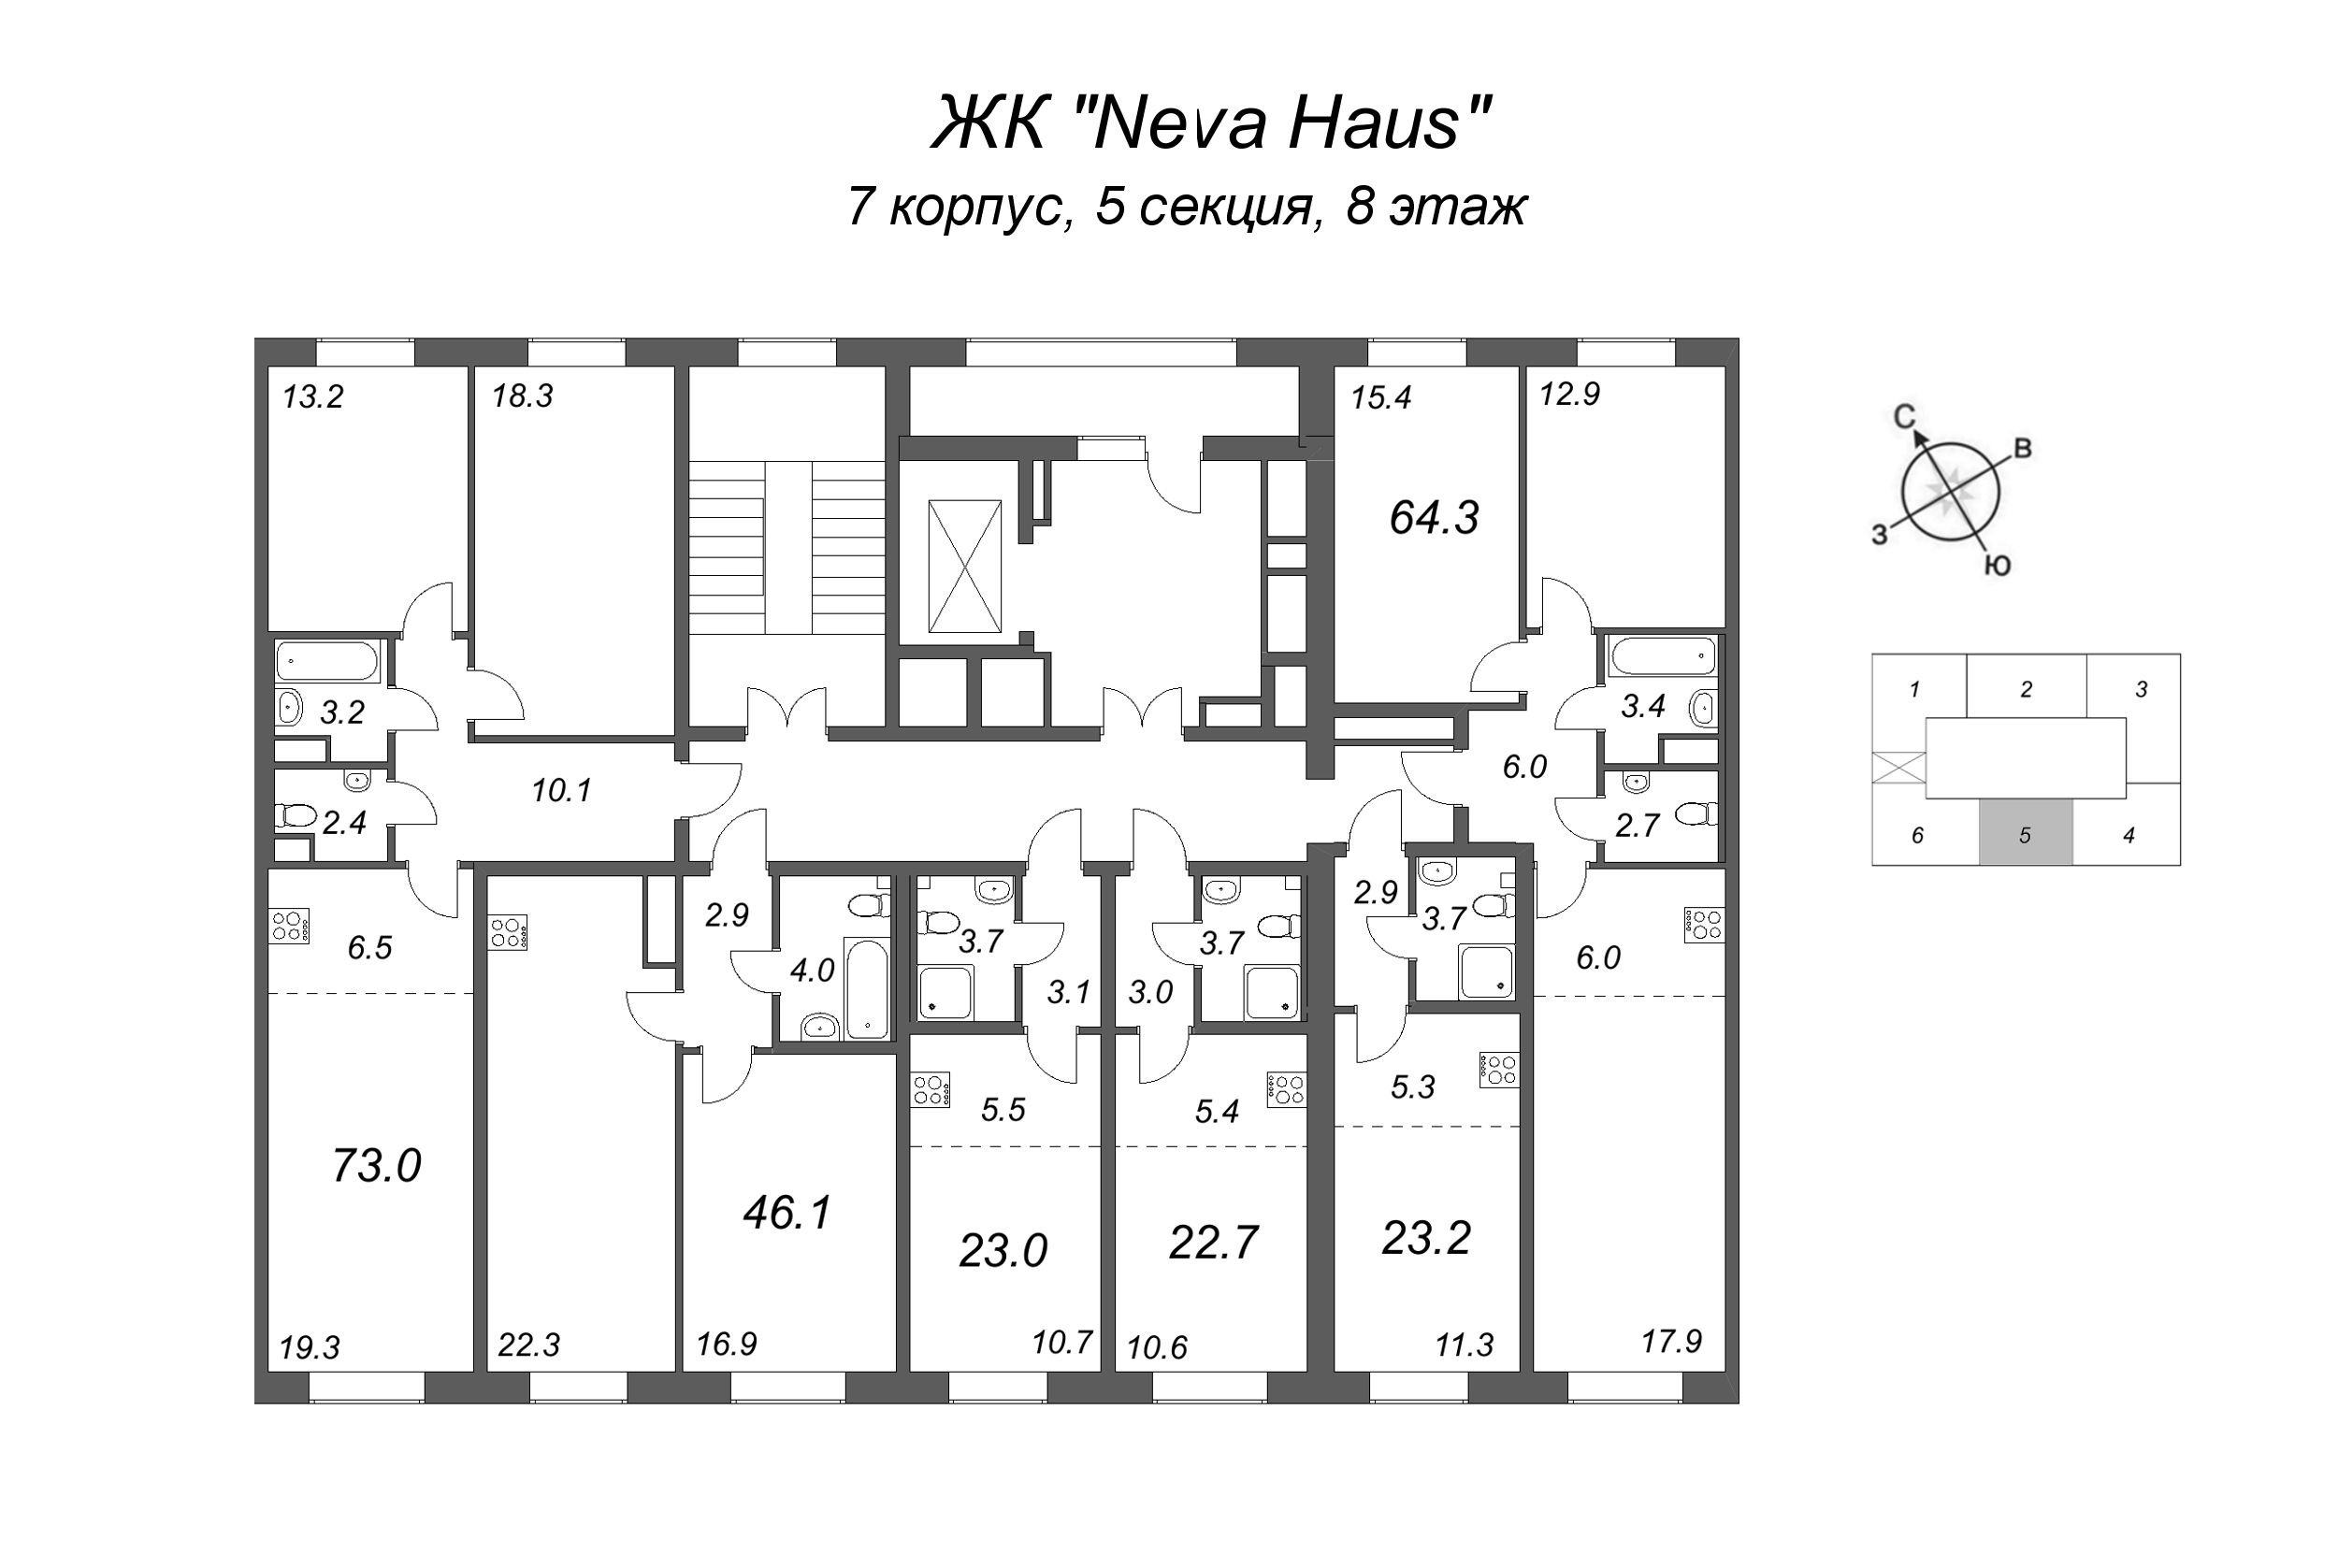 3-комнатная (Евро) квартира, 64.3 м² - планировка этажа